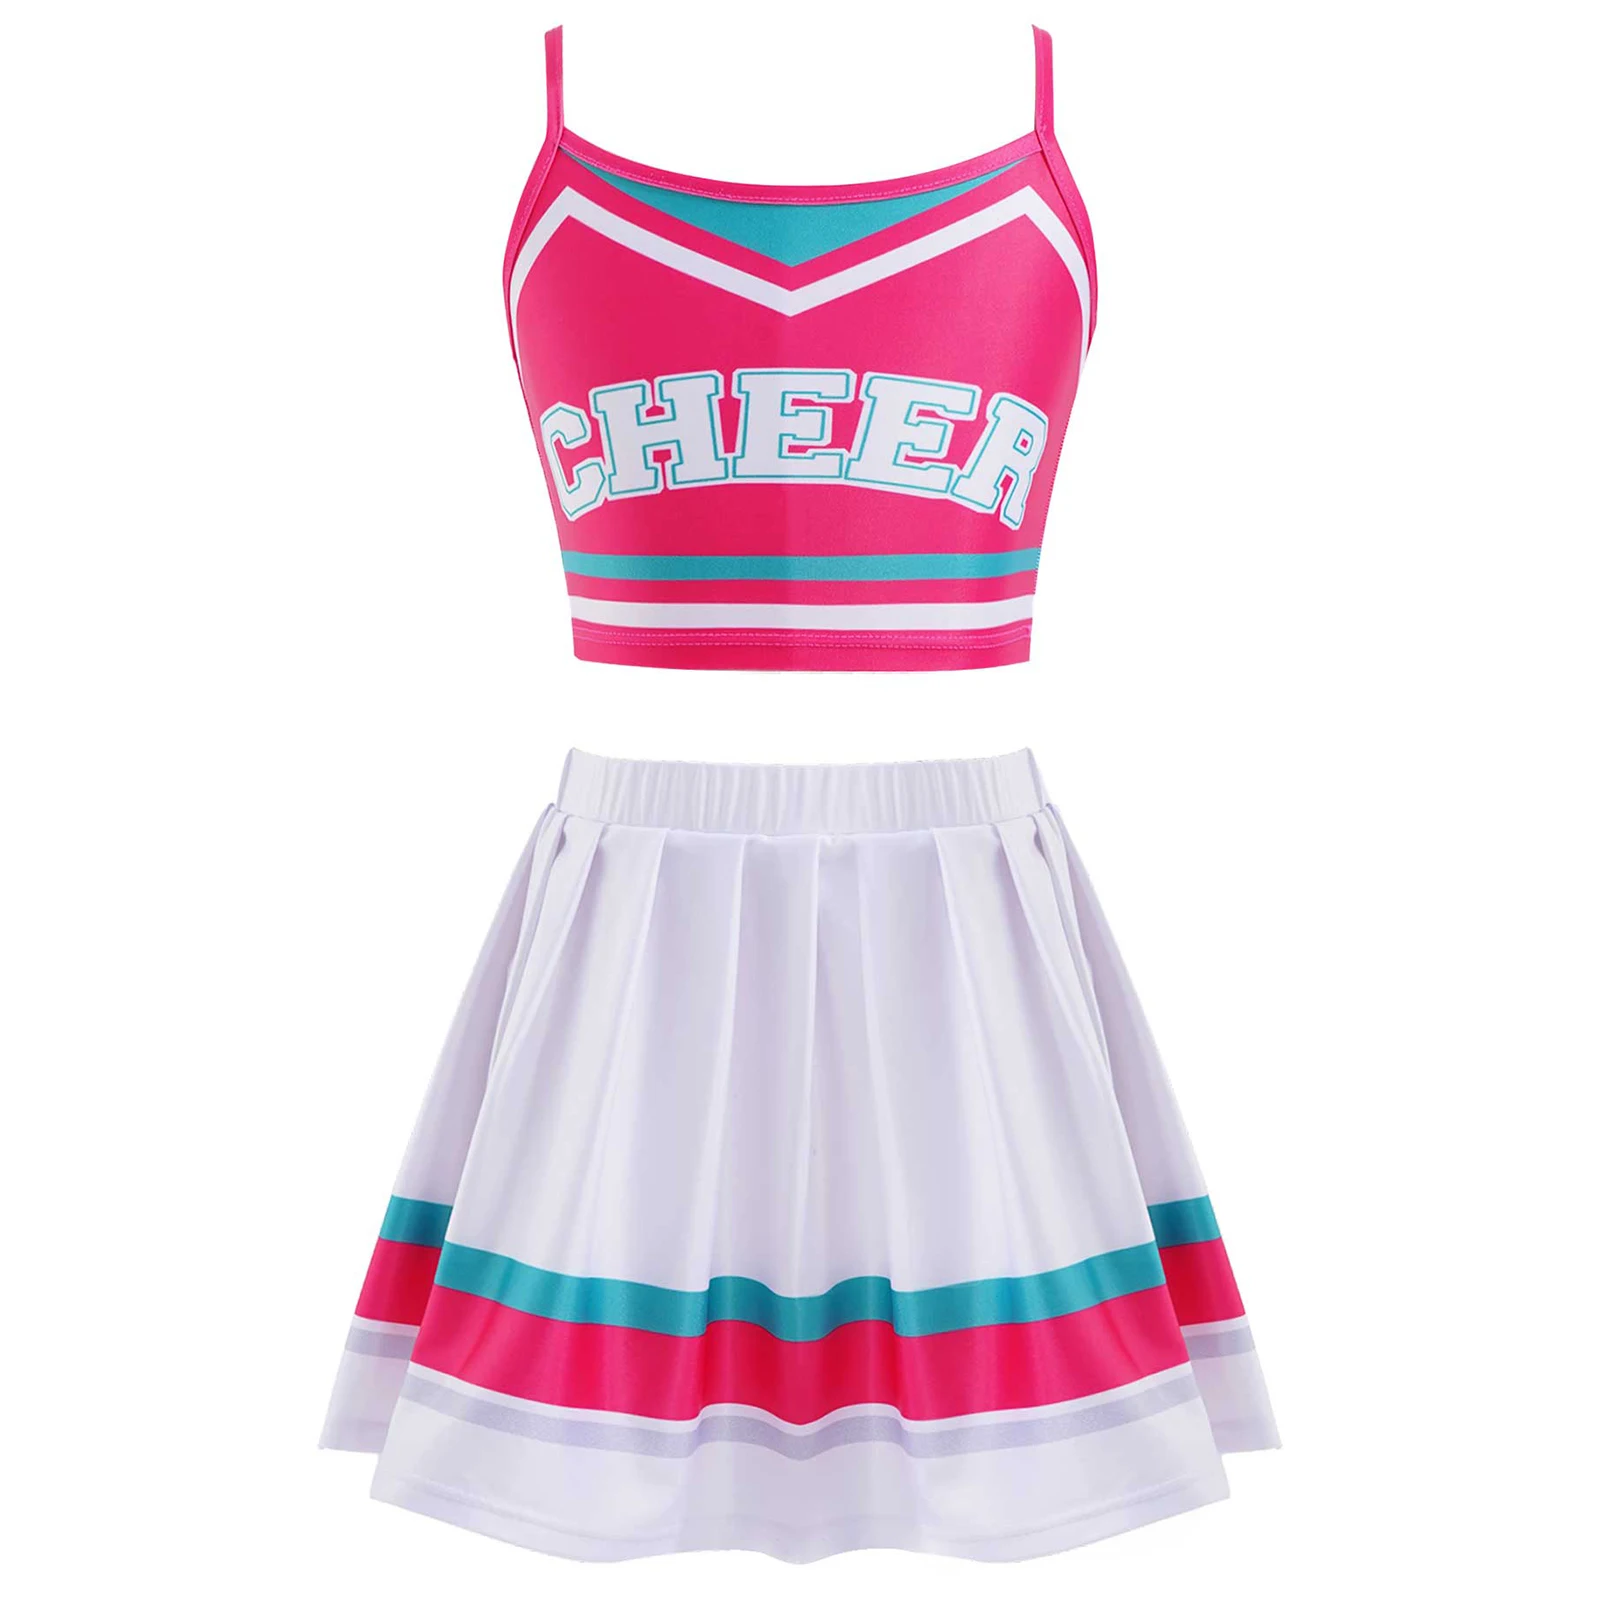 

Girls Cheerleader Costume Jazz Dance Costumes Kids Sleeveless Tank Crop Top With Skirt Set School Cheerleading Uniform Outfits